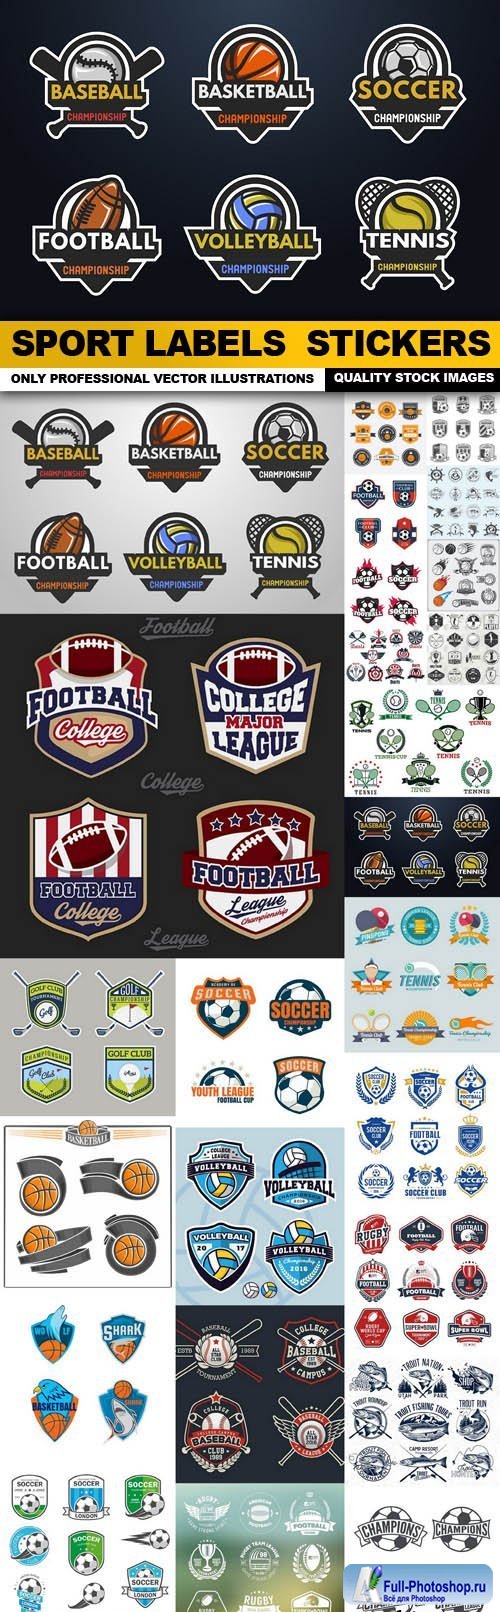 Sport Labels Stickers - 25 Vector